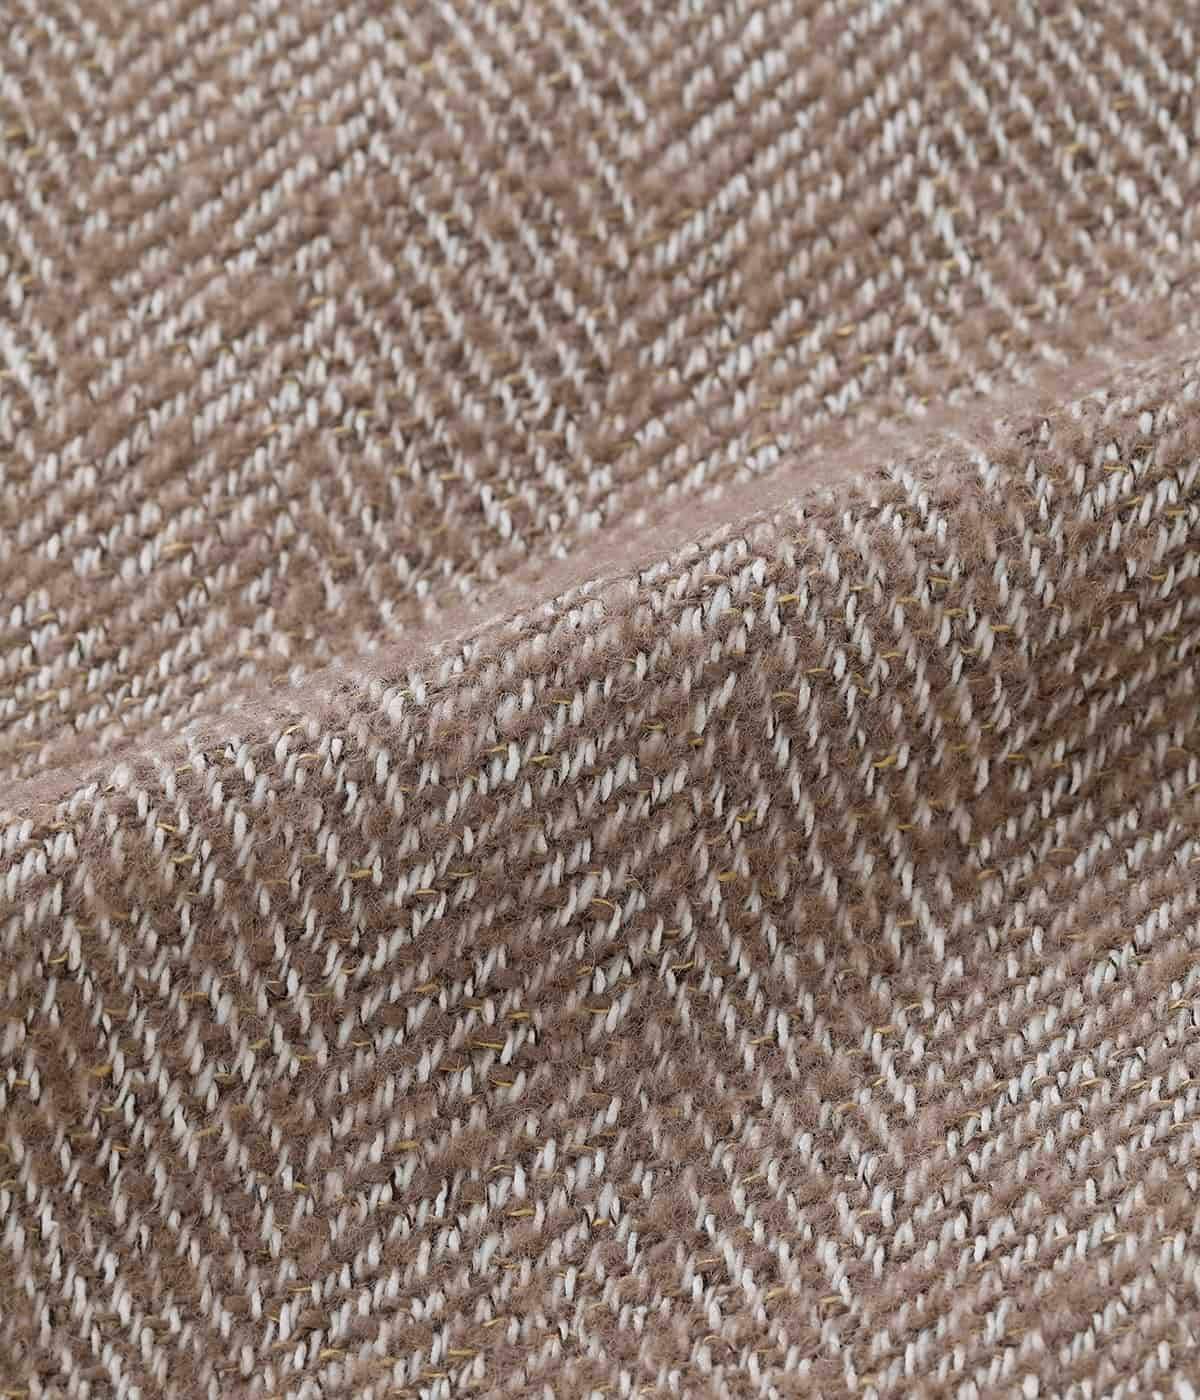 SIPULI｜Herringbone Tweed ノーカラーコート | Rakuten Fashion(楽天